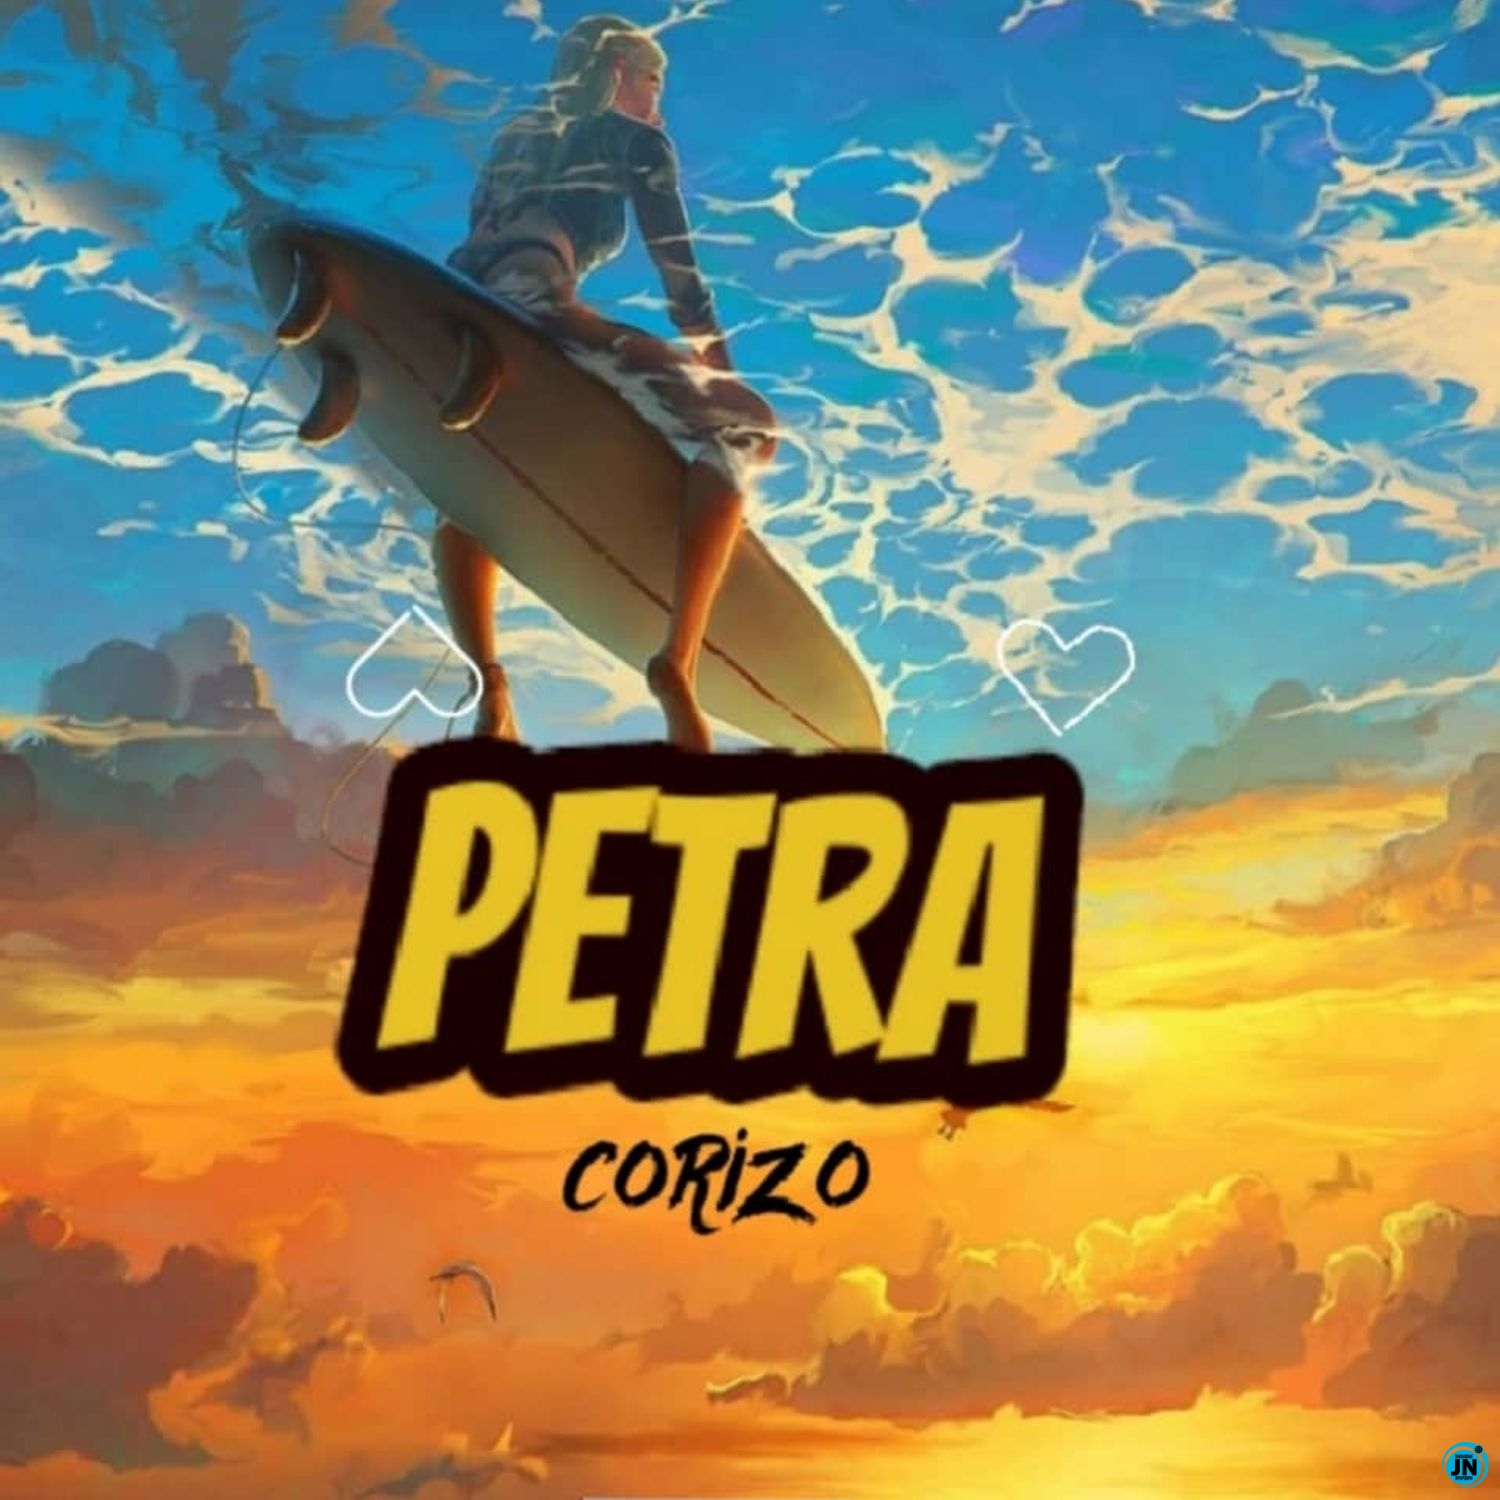 Corizo - Petra   Mp3 Download lyrics